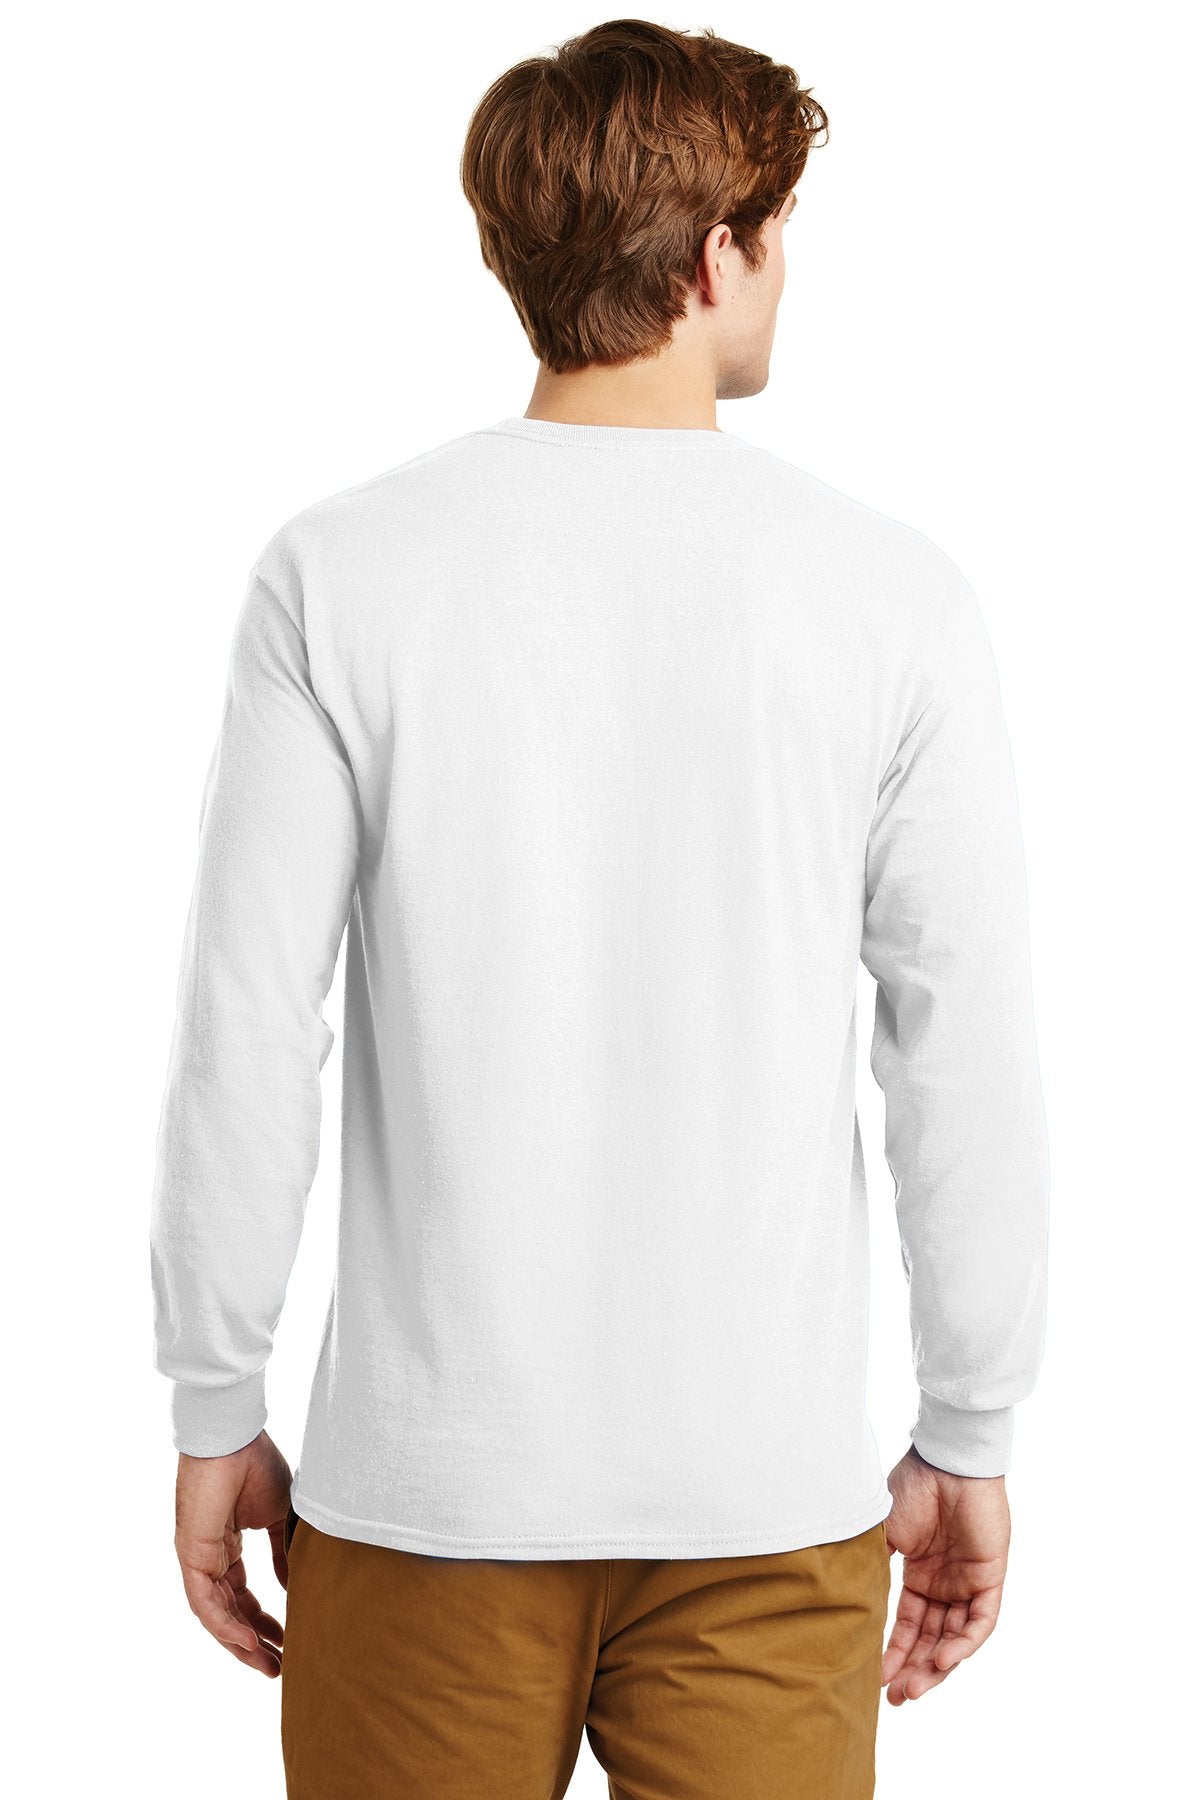 gildan ultra cotton long sleeve t shirt g2400 white